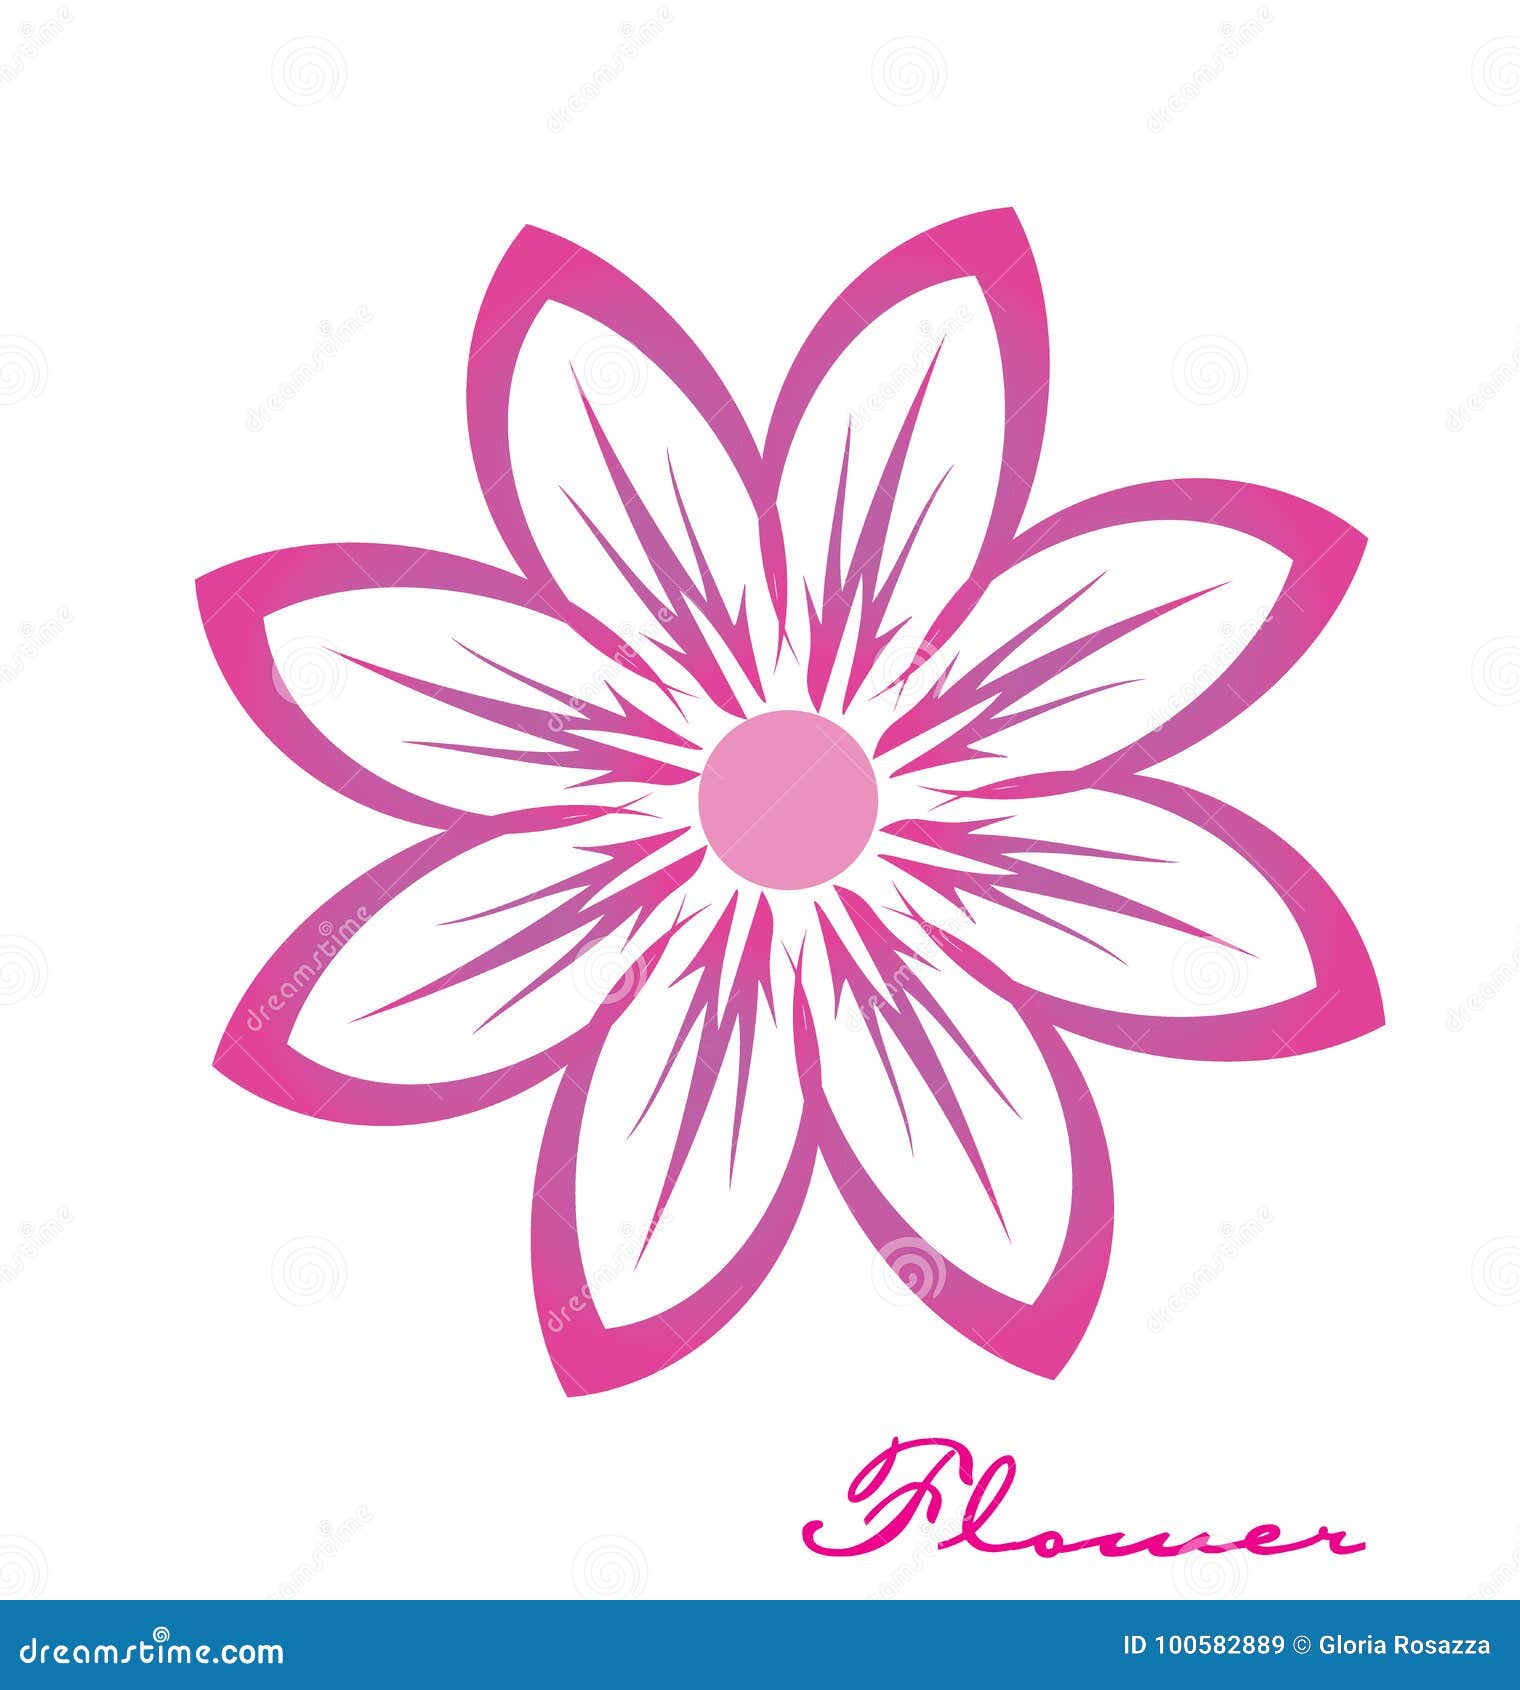  Pink  flower  image logo  stock vector Illustration of 